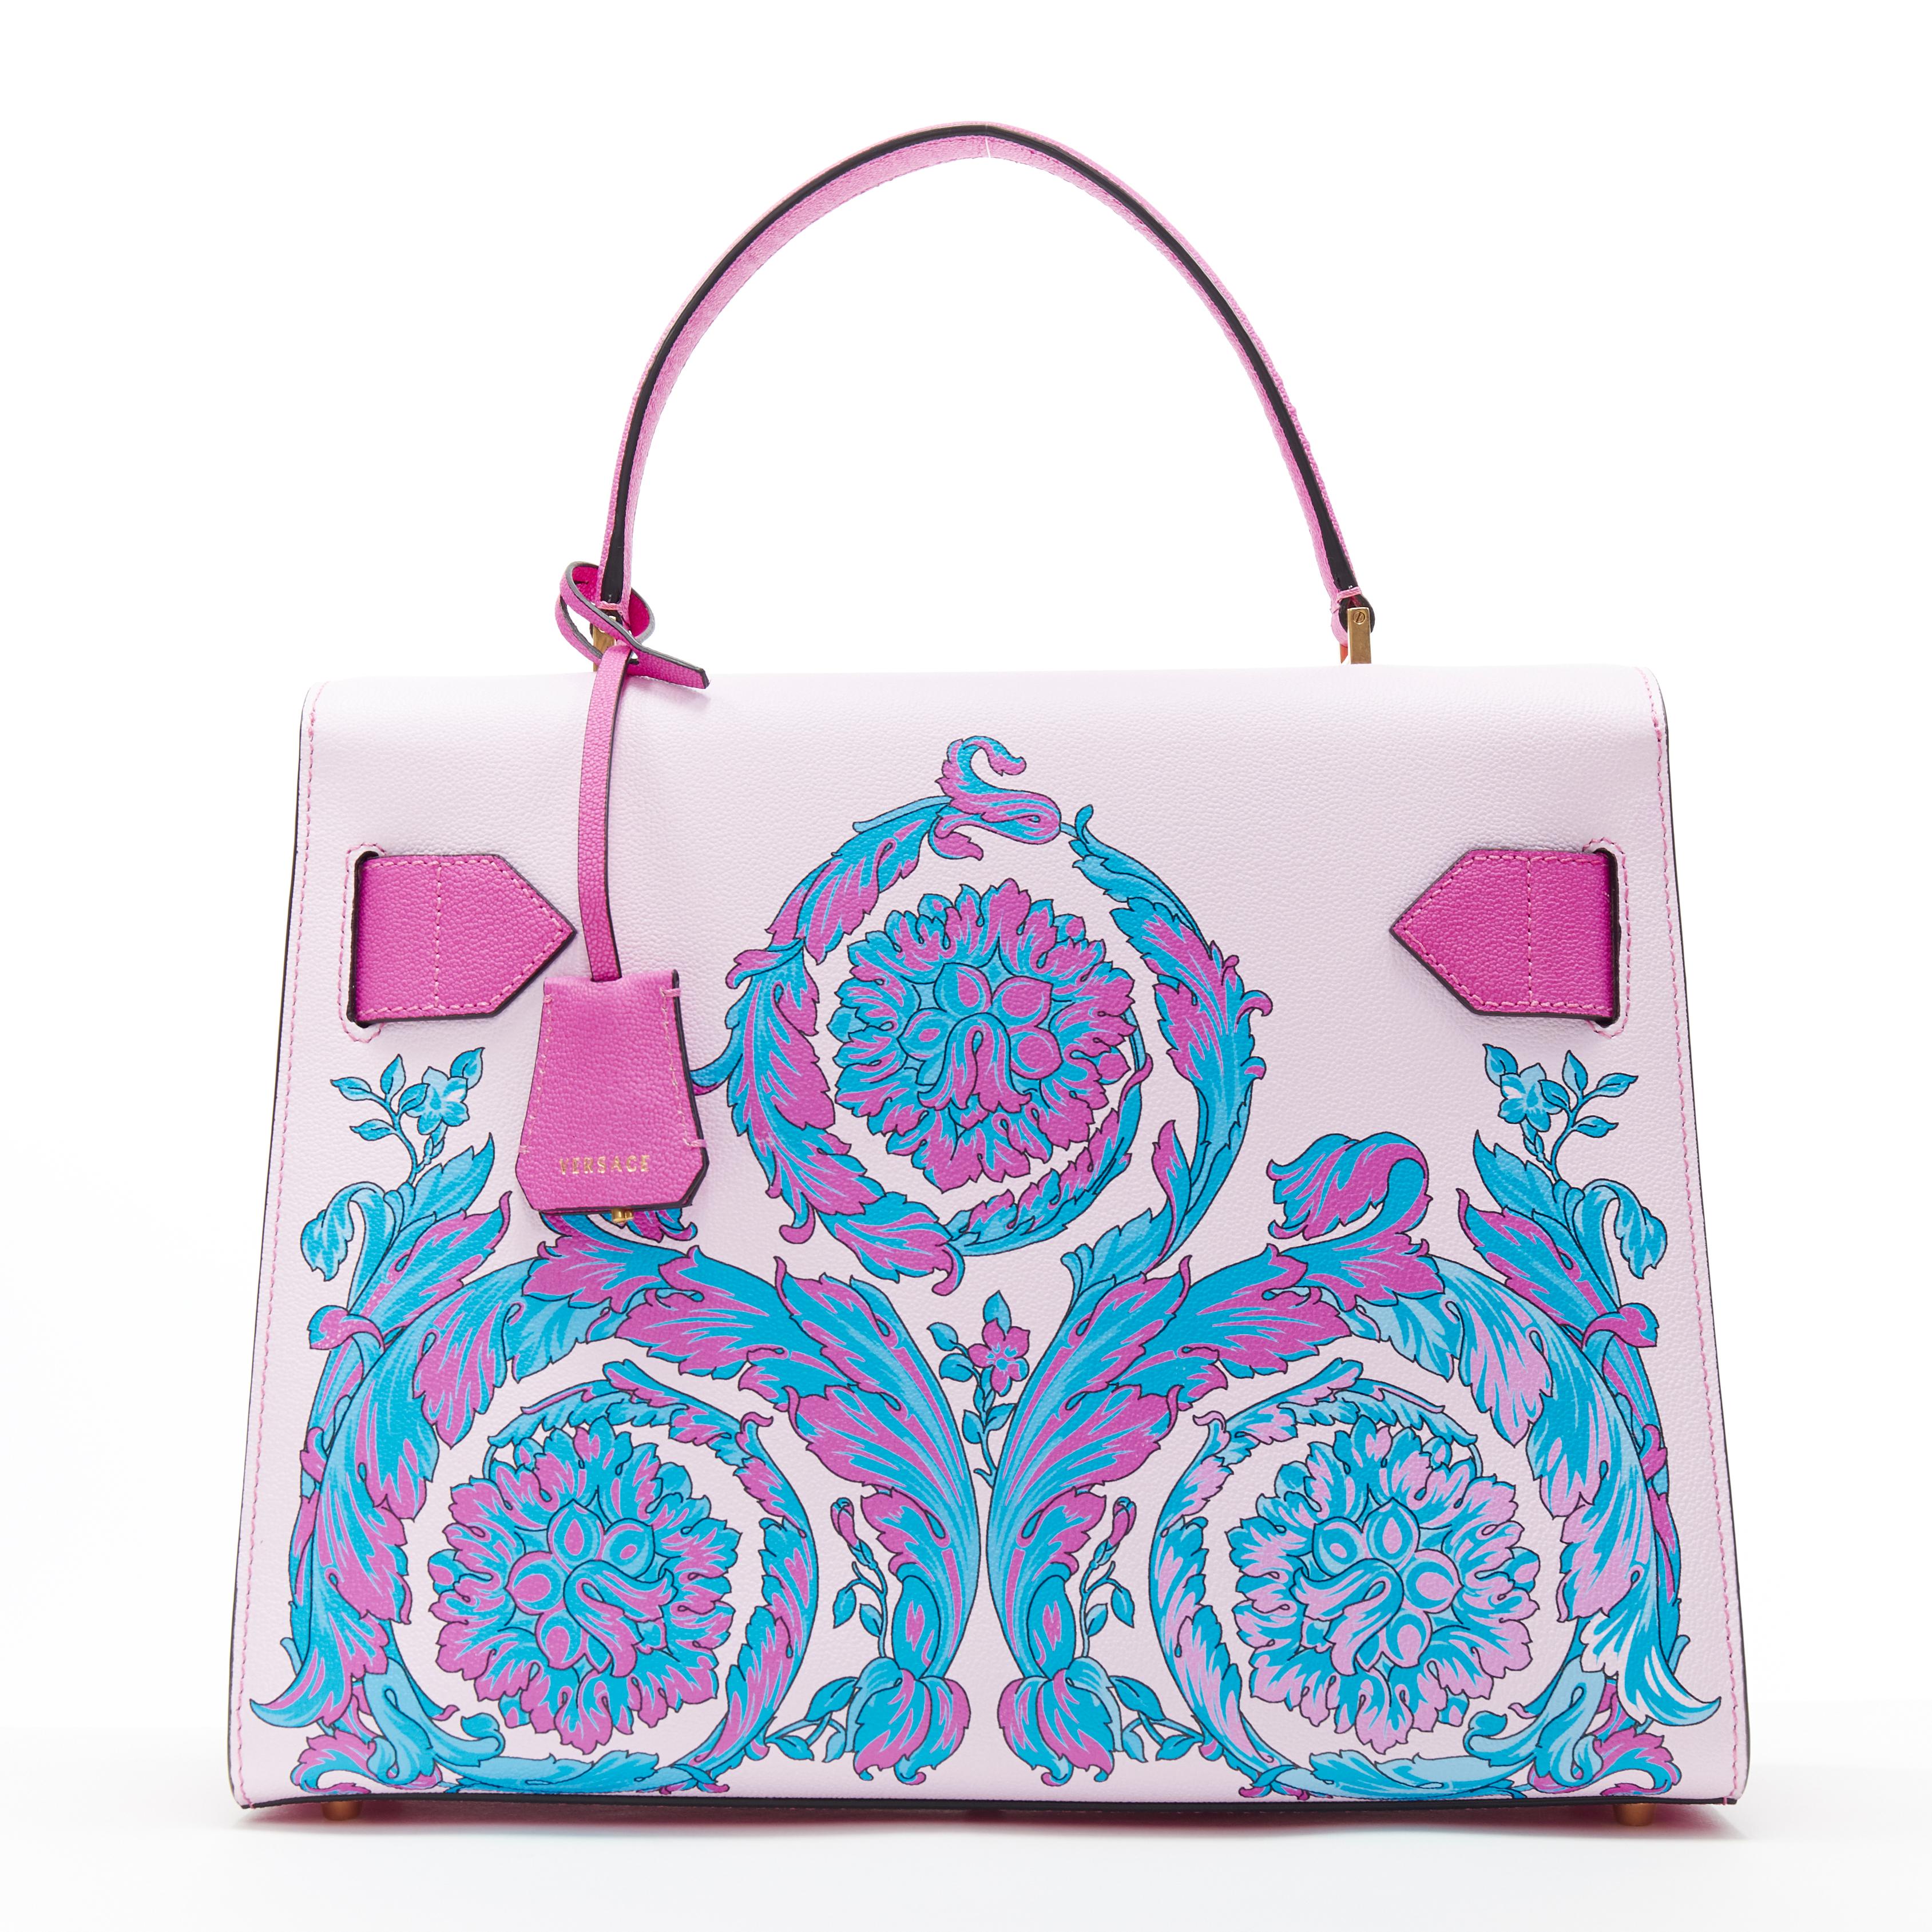 Gray new VERSACE Diana Tribute Technicolor Baroque print top handle Kelly satchel bag